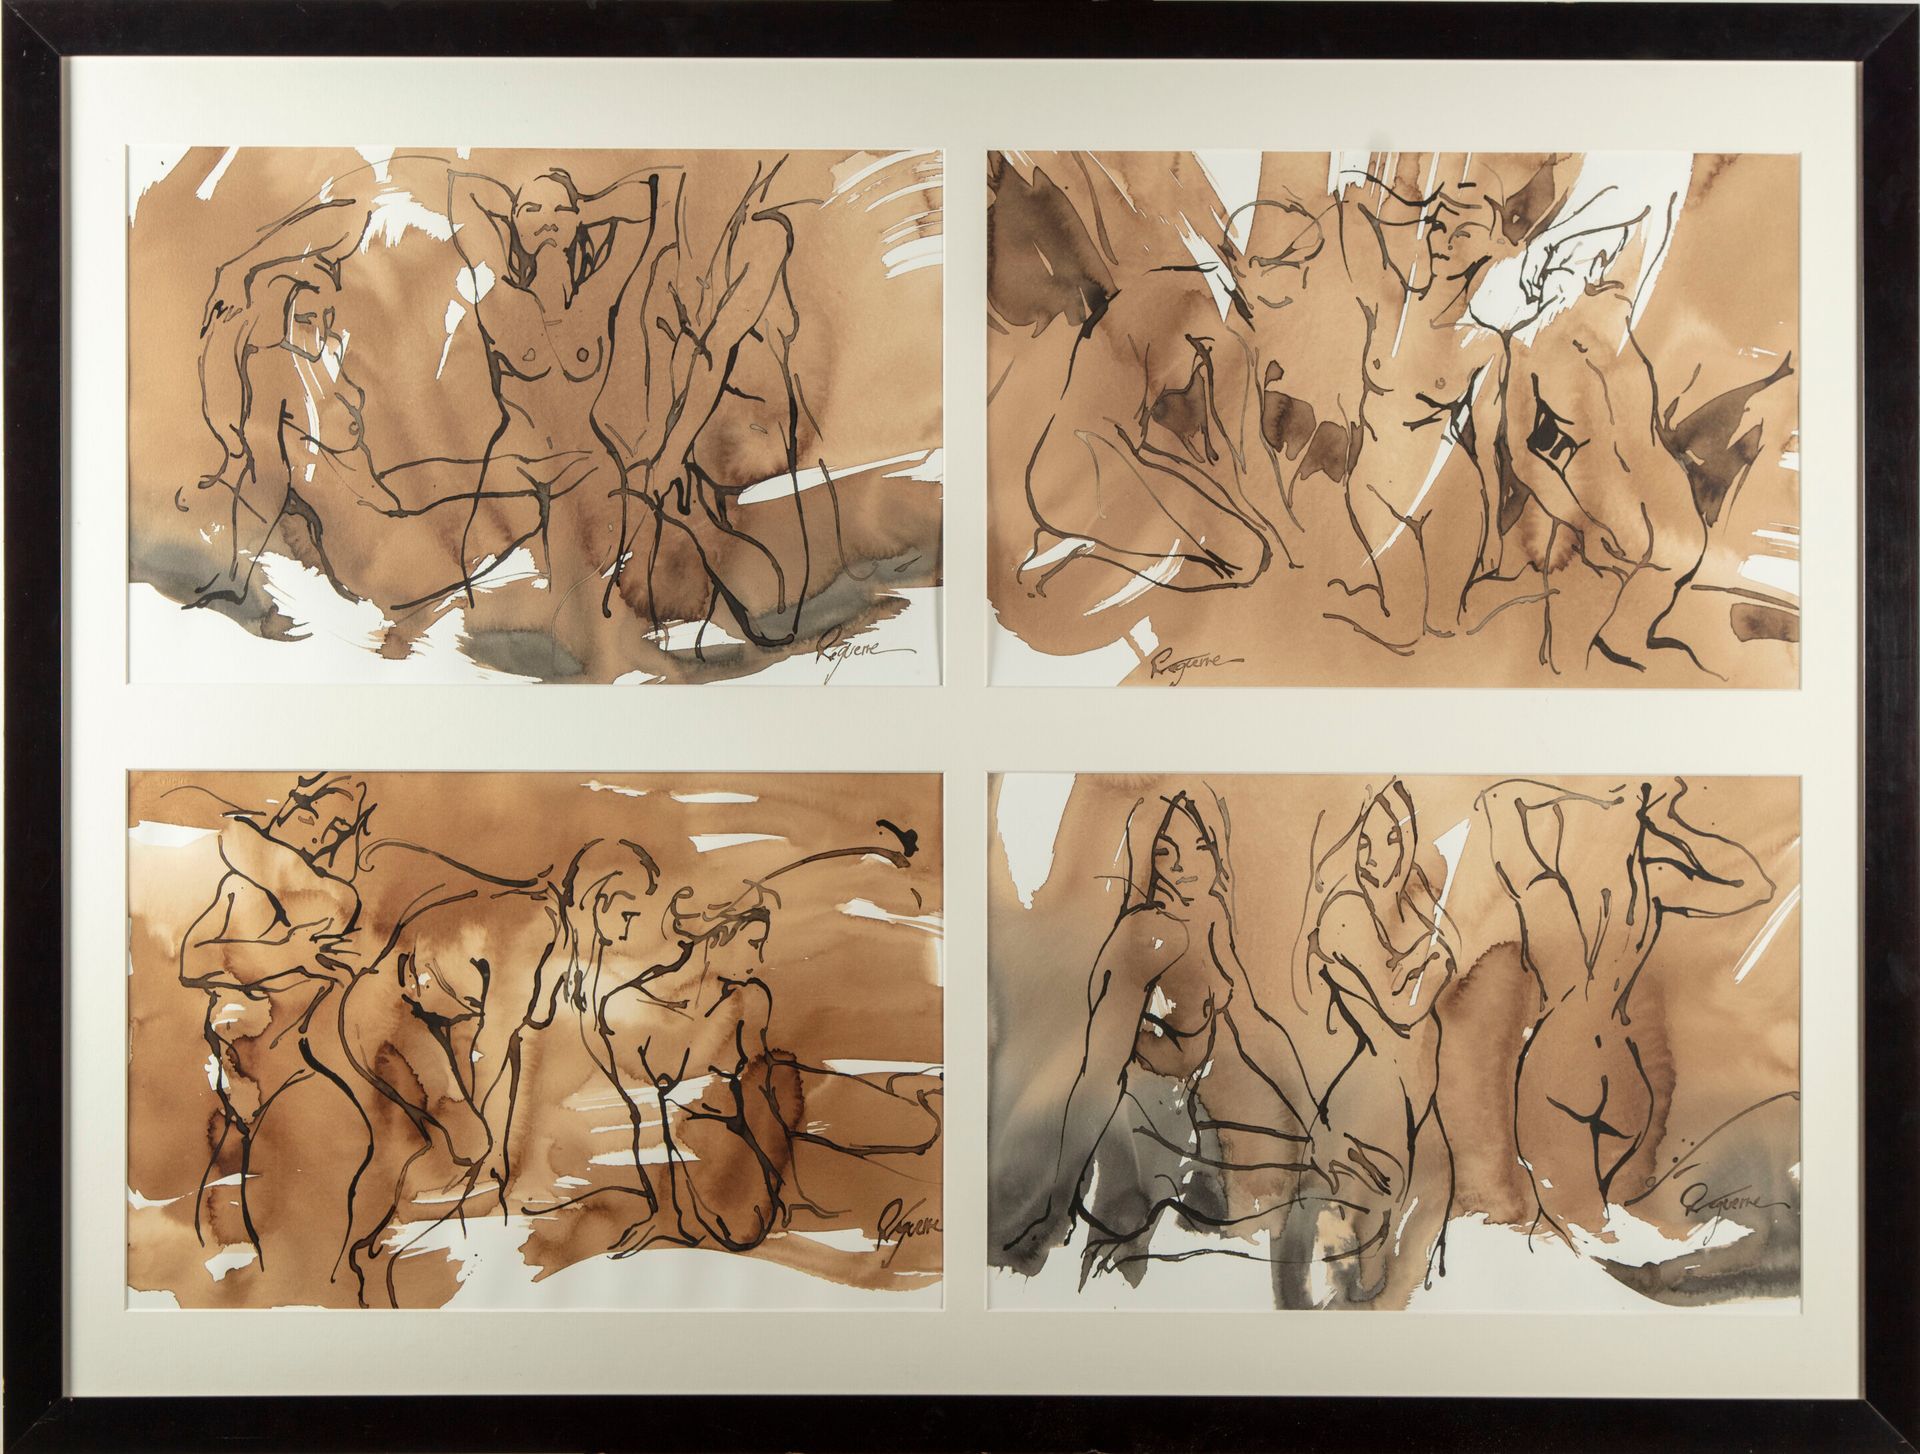 Null Cyril REGUERRE (生于1970年)

一套四幅女性裸体研究

水墨画，右下角有签名

玻璃下的框架